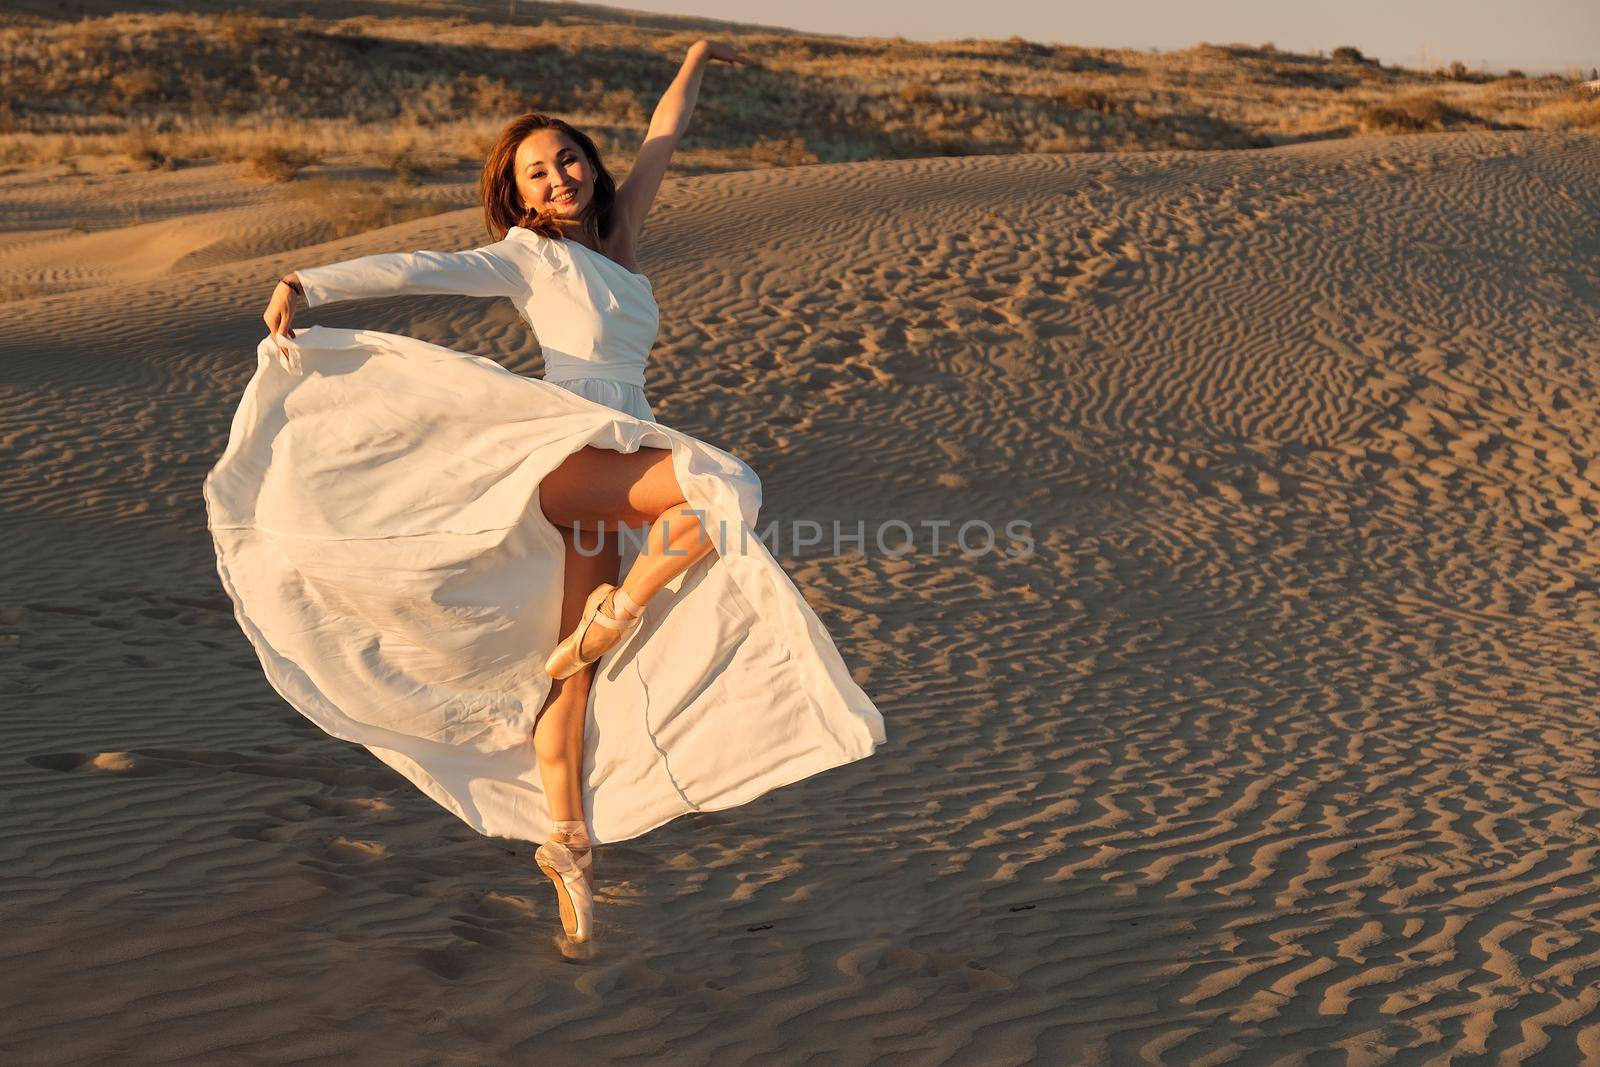 Dances in the desert in white dress by snep_photo